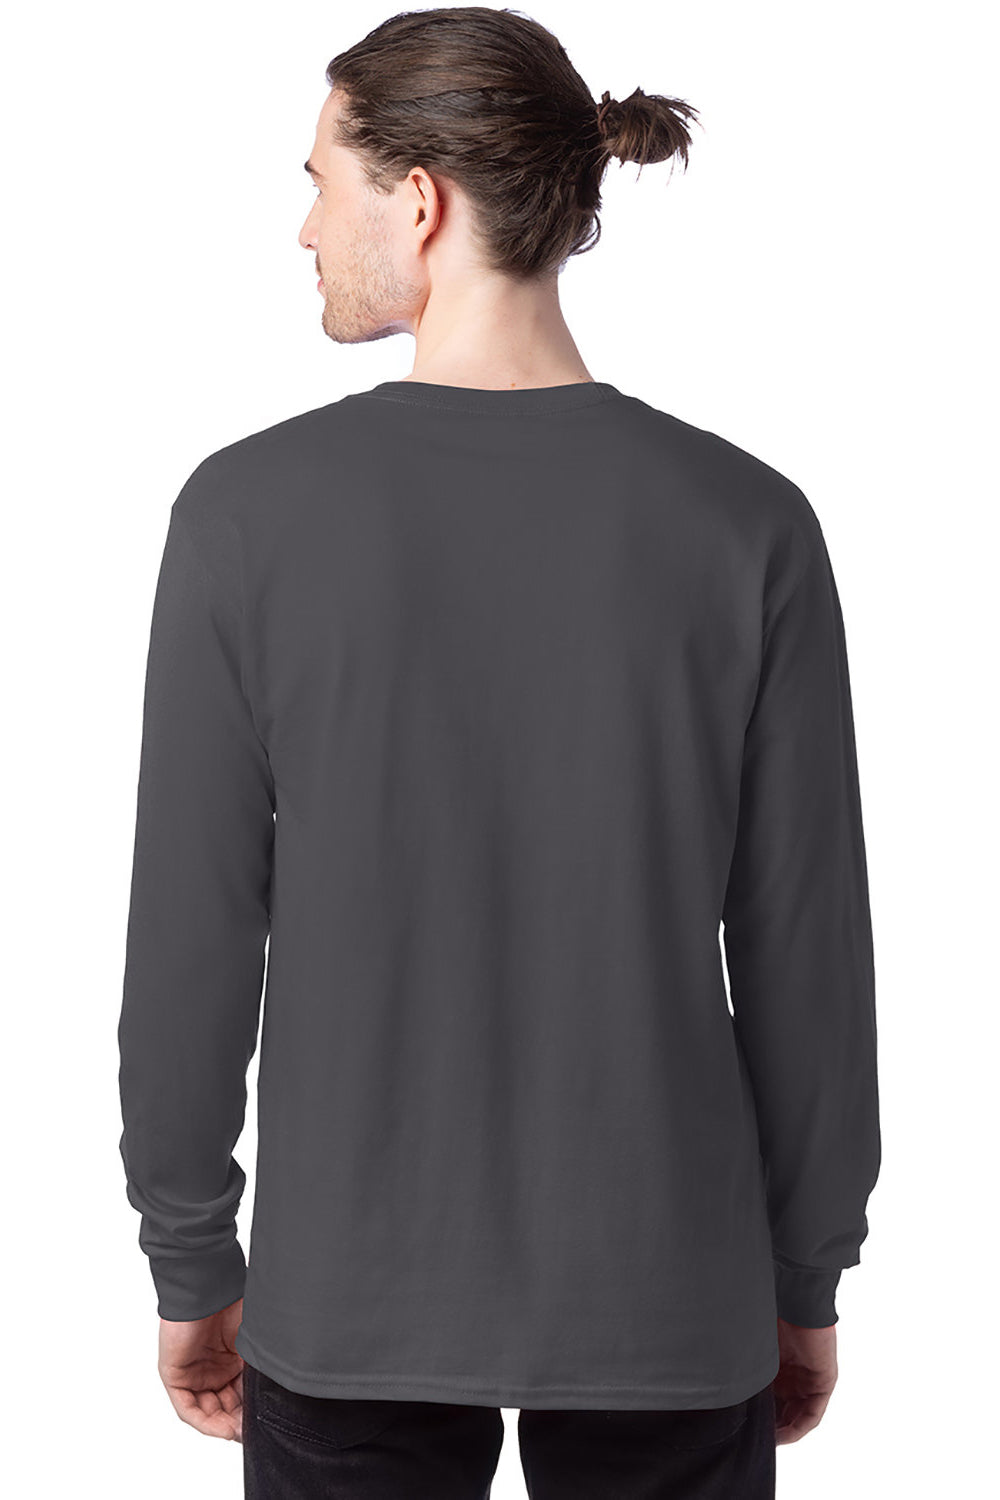 Hanes 5286 Mens ComfortSoft Long Sleeve Crewneck T-Shirt Smoke Grey Back